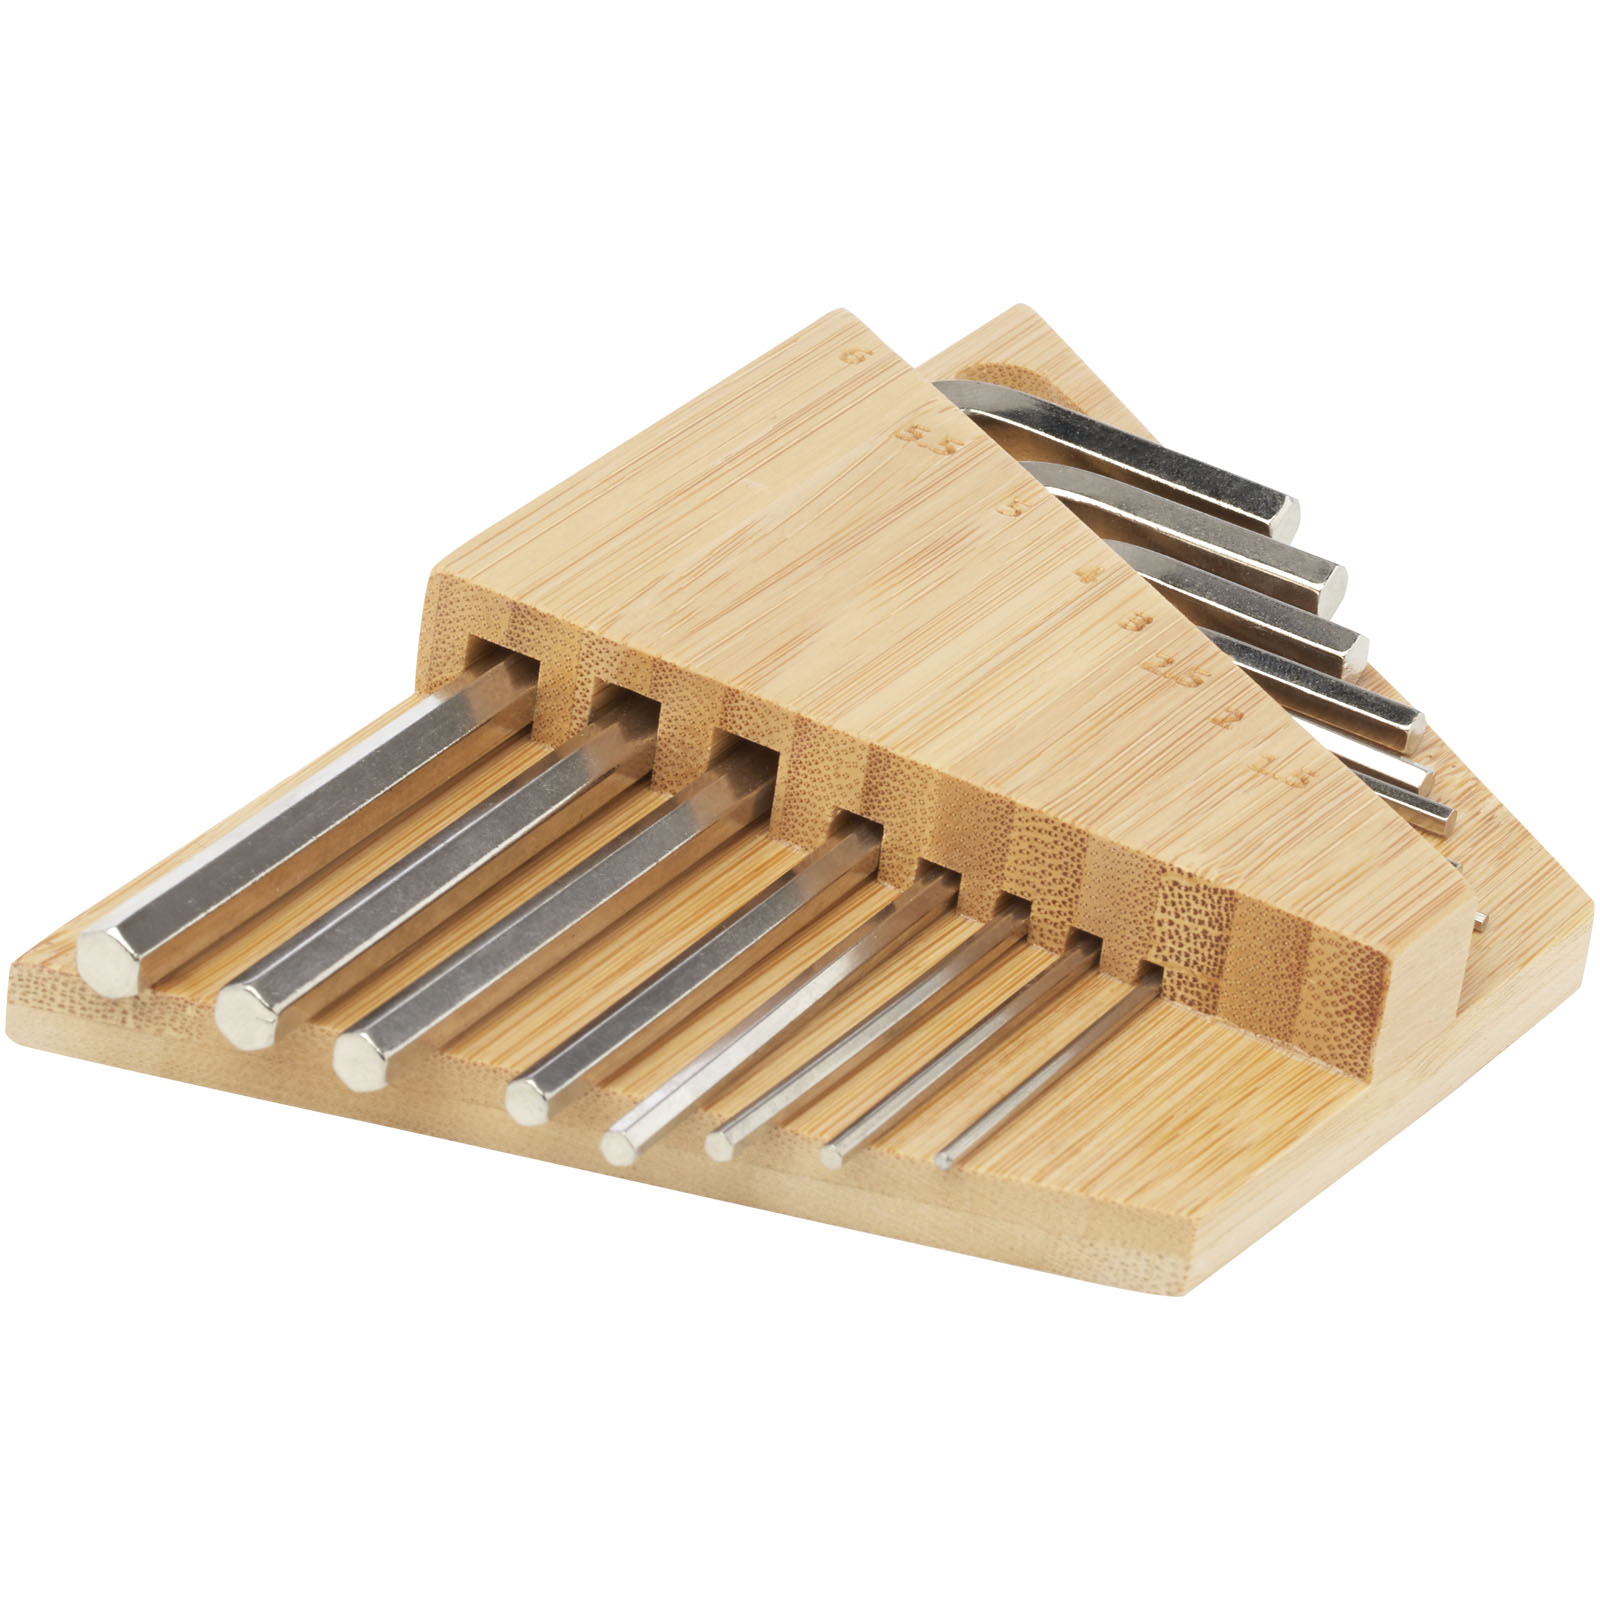 Advertising Tool sets - Allen bamboo hex key tool set